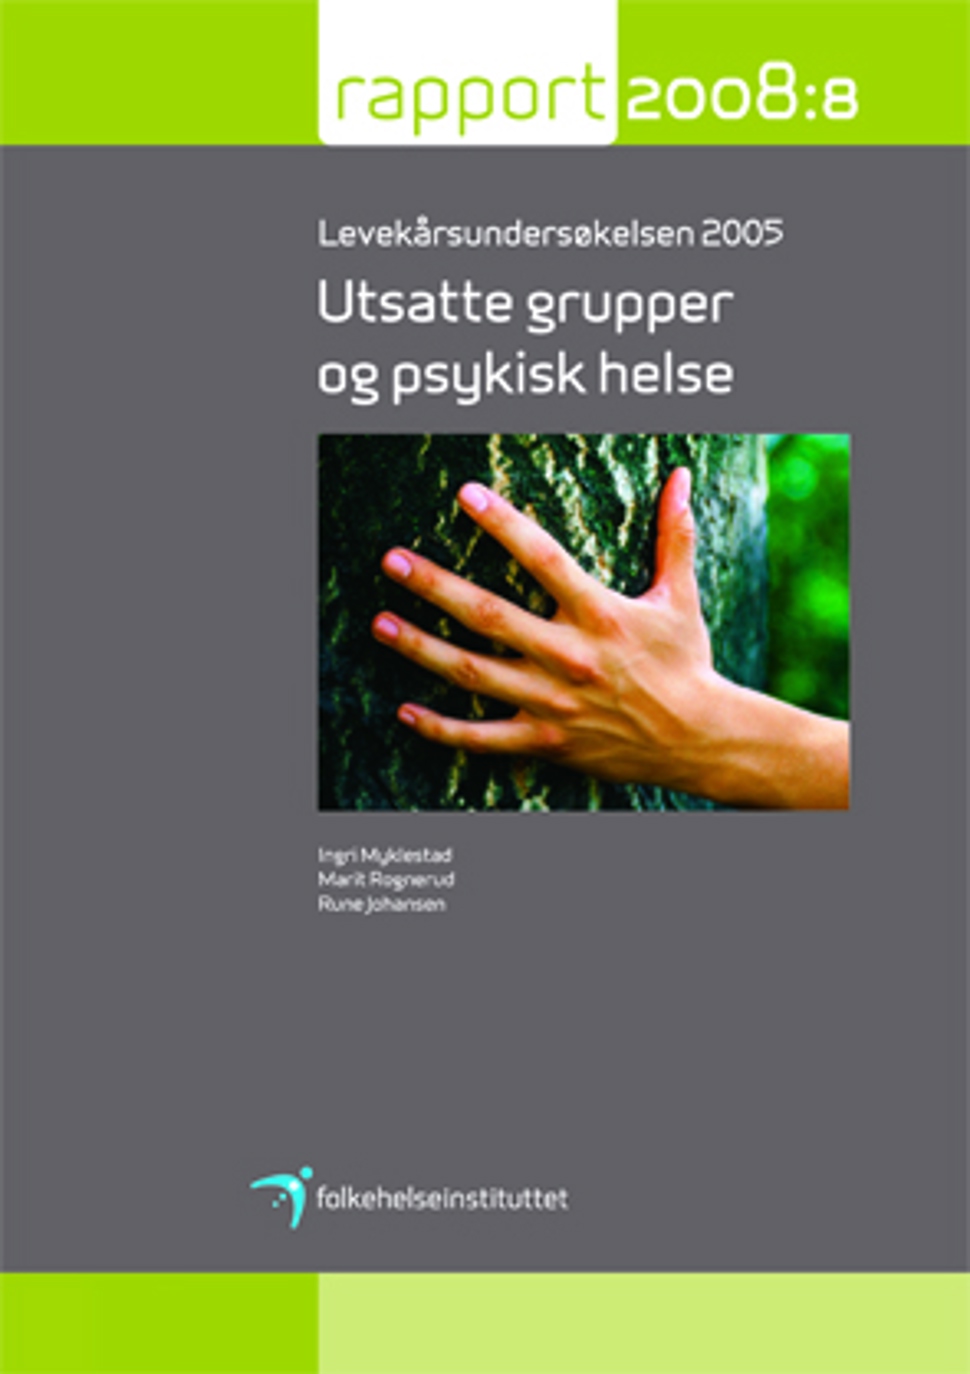 Rapportomslag Rapport 2008:8 